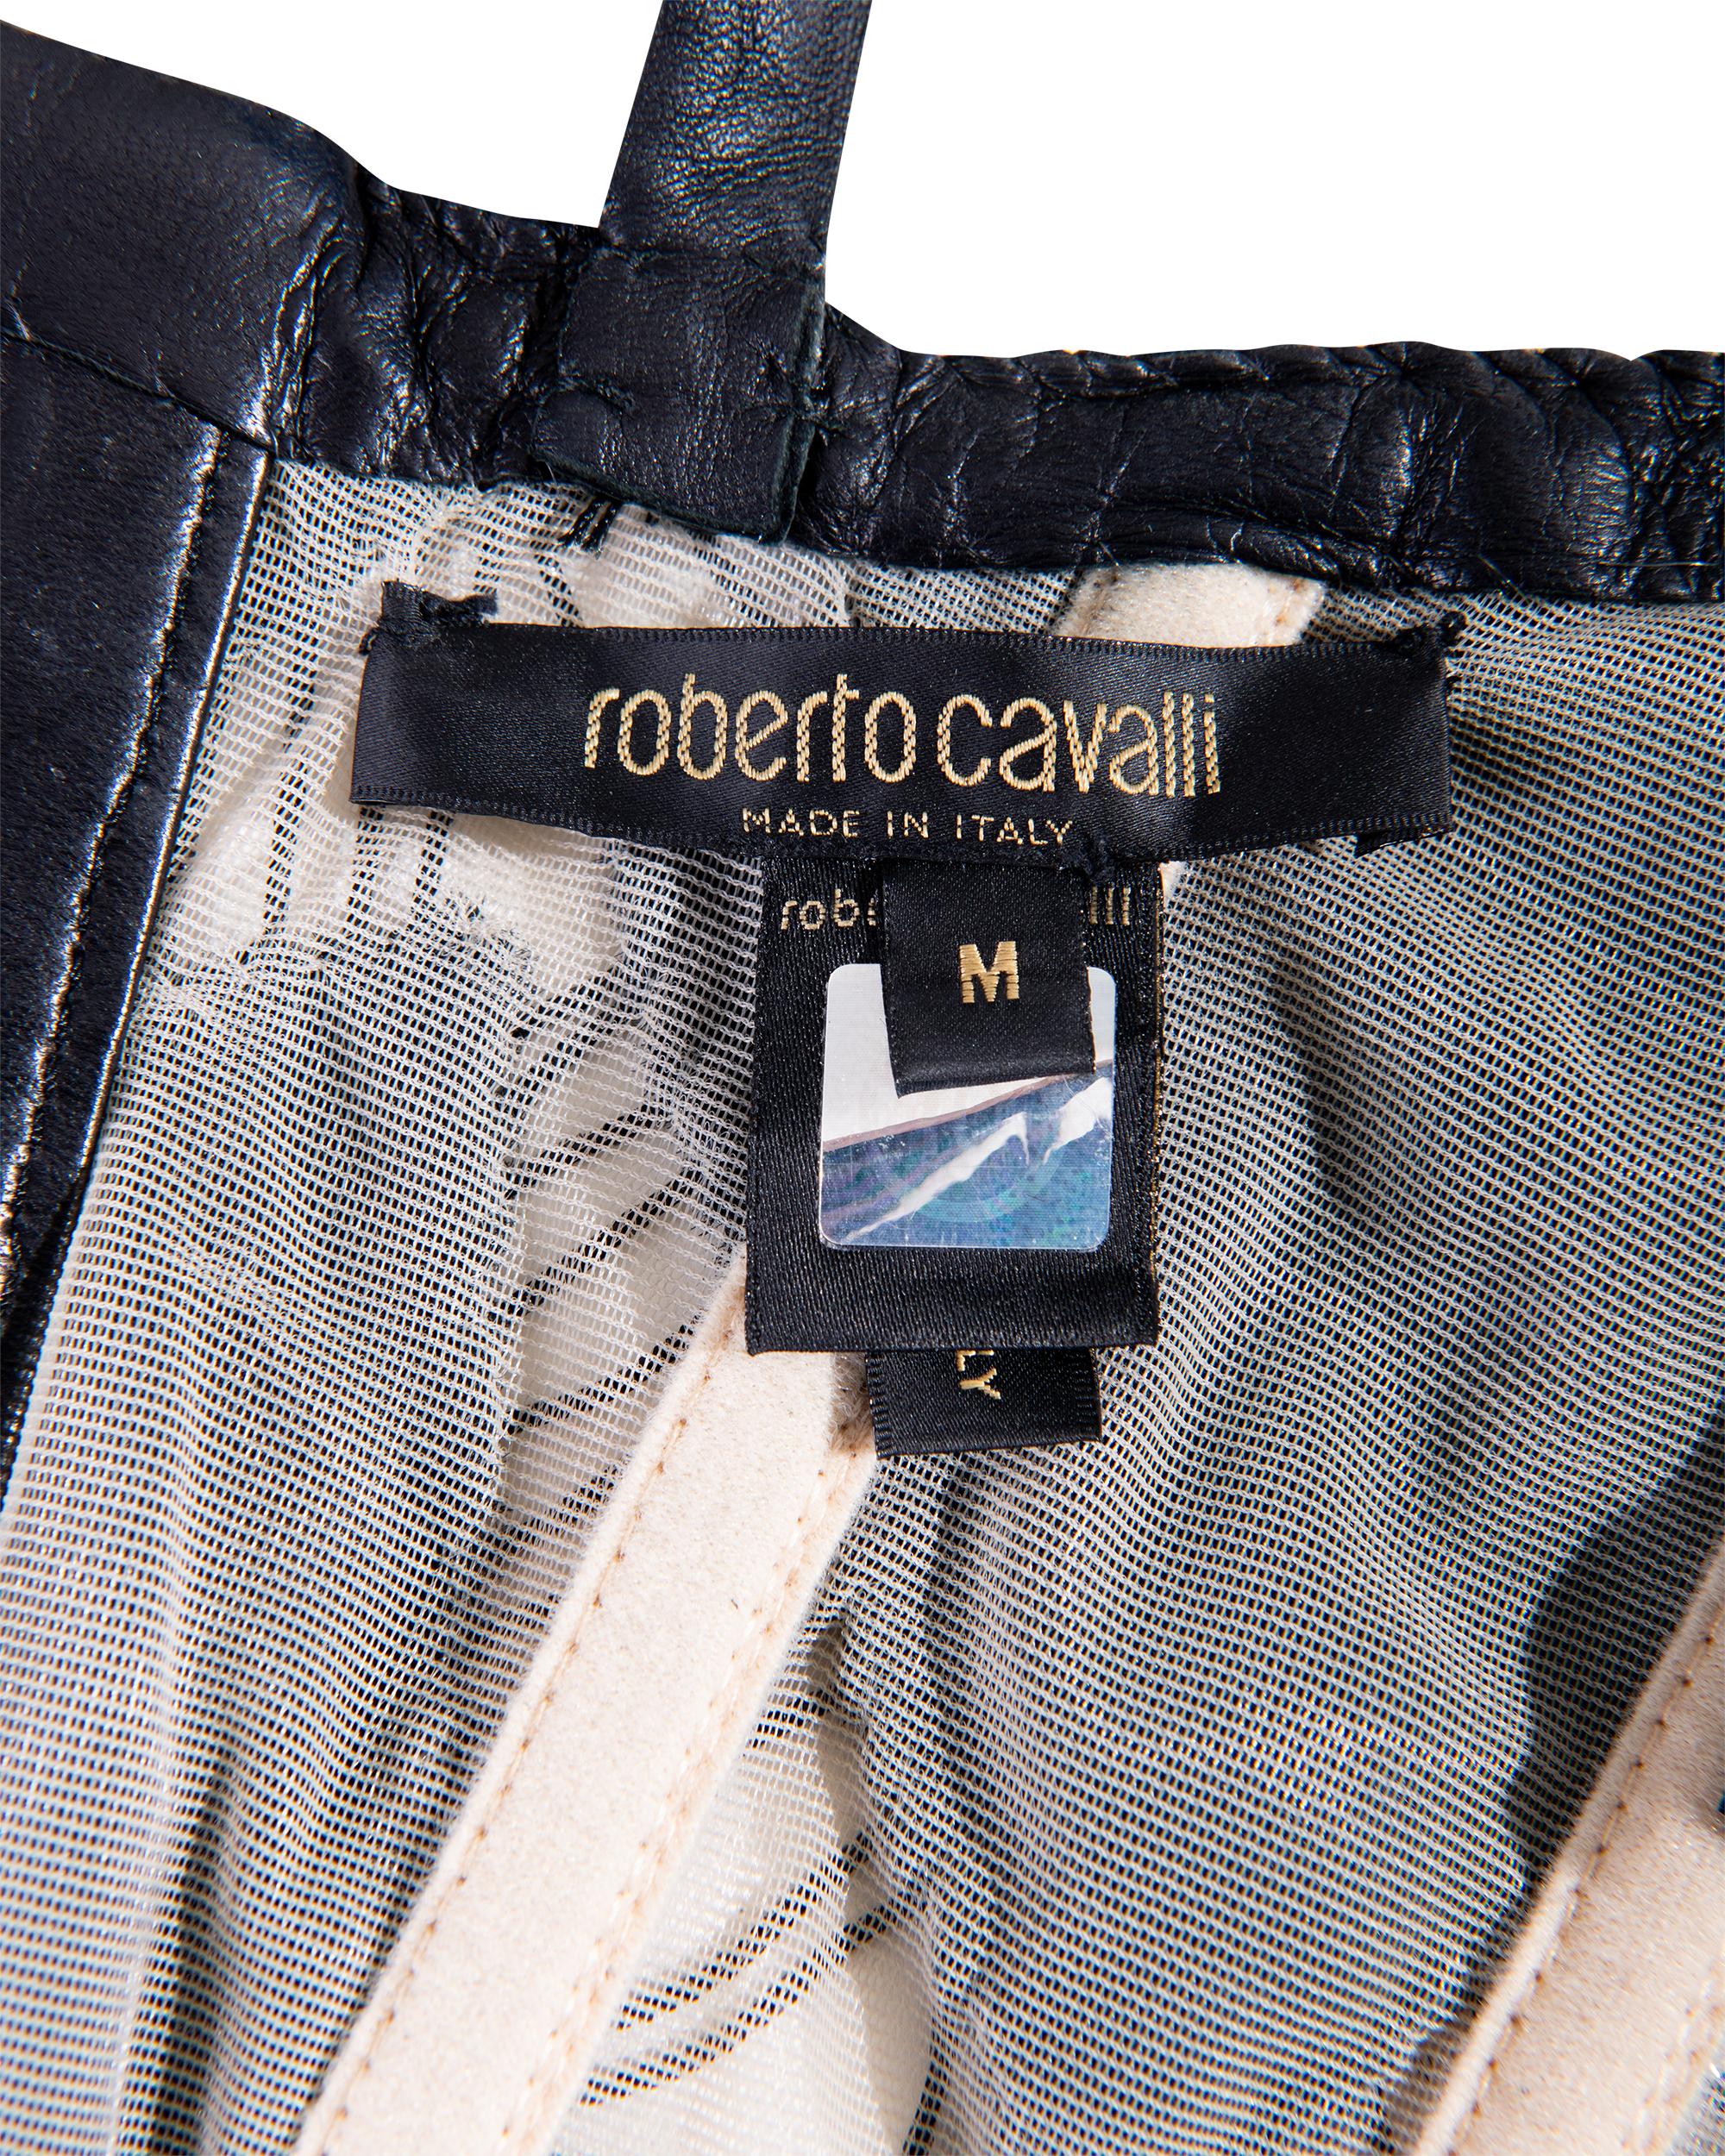 S/S 2004 Roberto Cavalli Geometric Black Embellished Leather Corset Fringe Dress 8